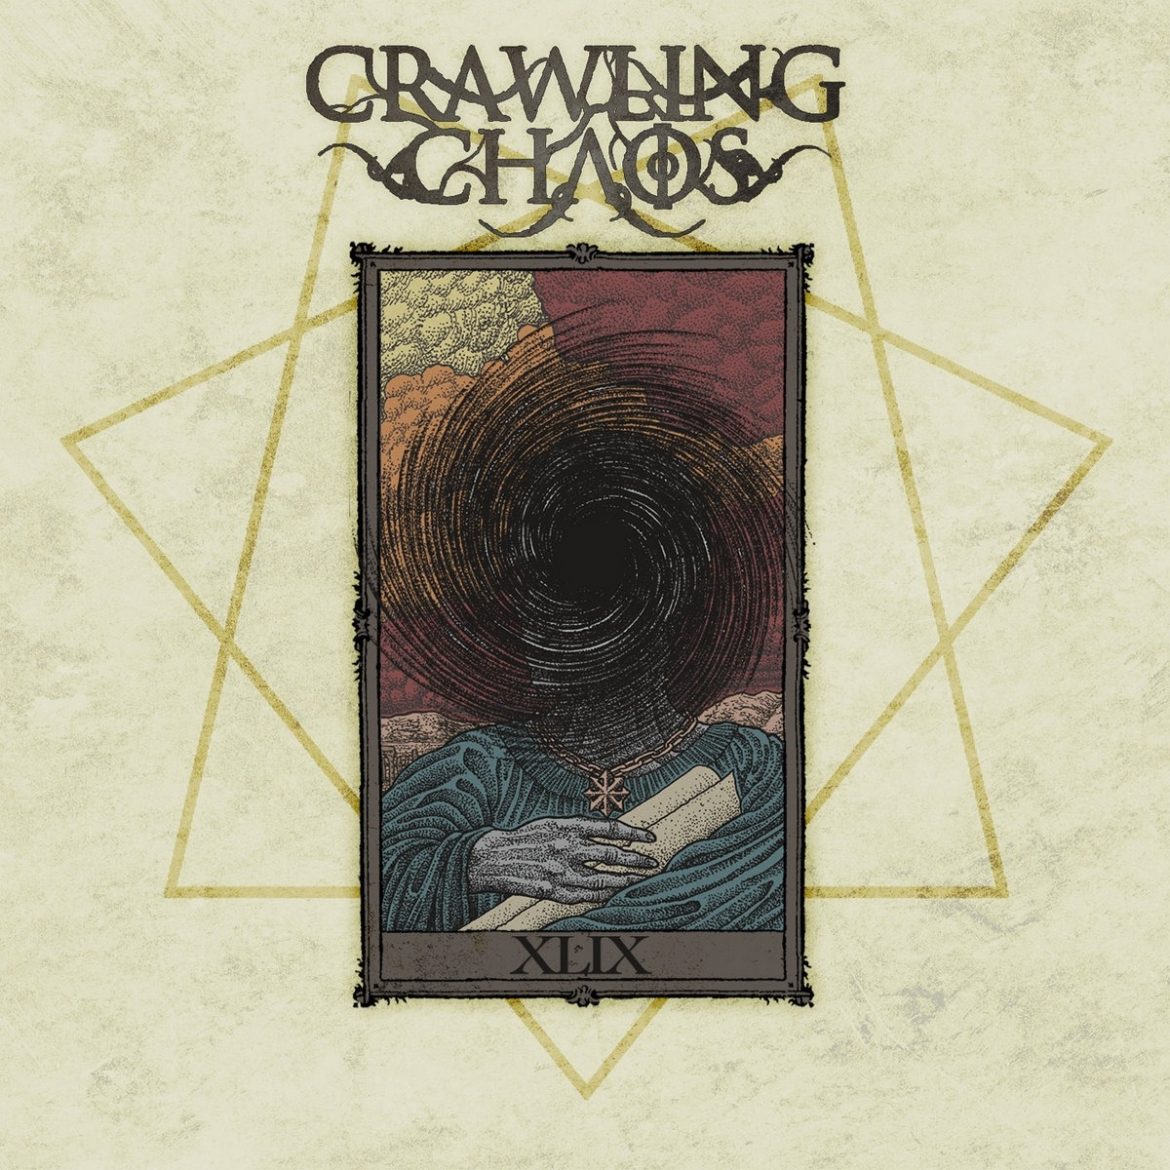 alt="crawling chaos cover album xlix"